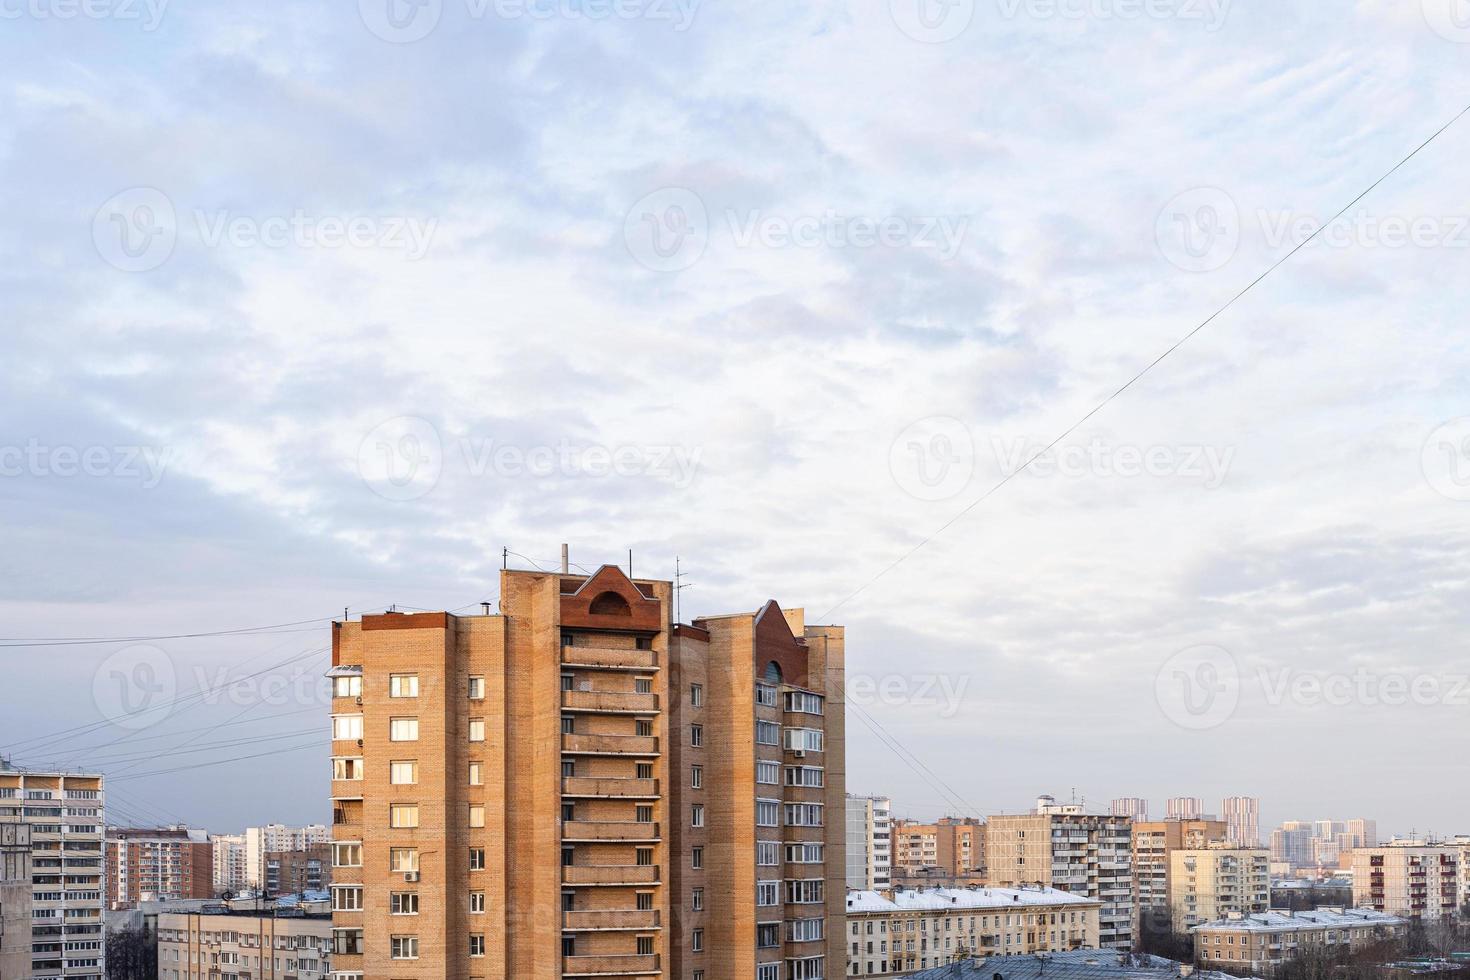 blauw lucht met wolken over- orban huizen in ochtend- foto